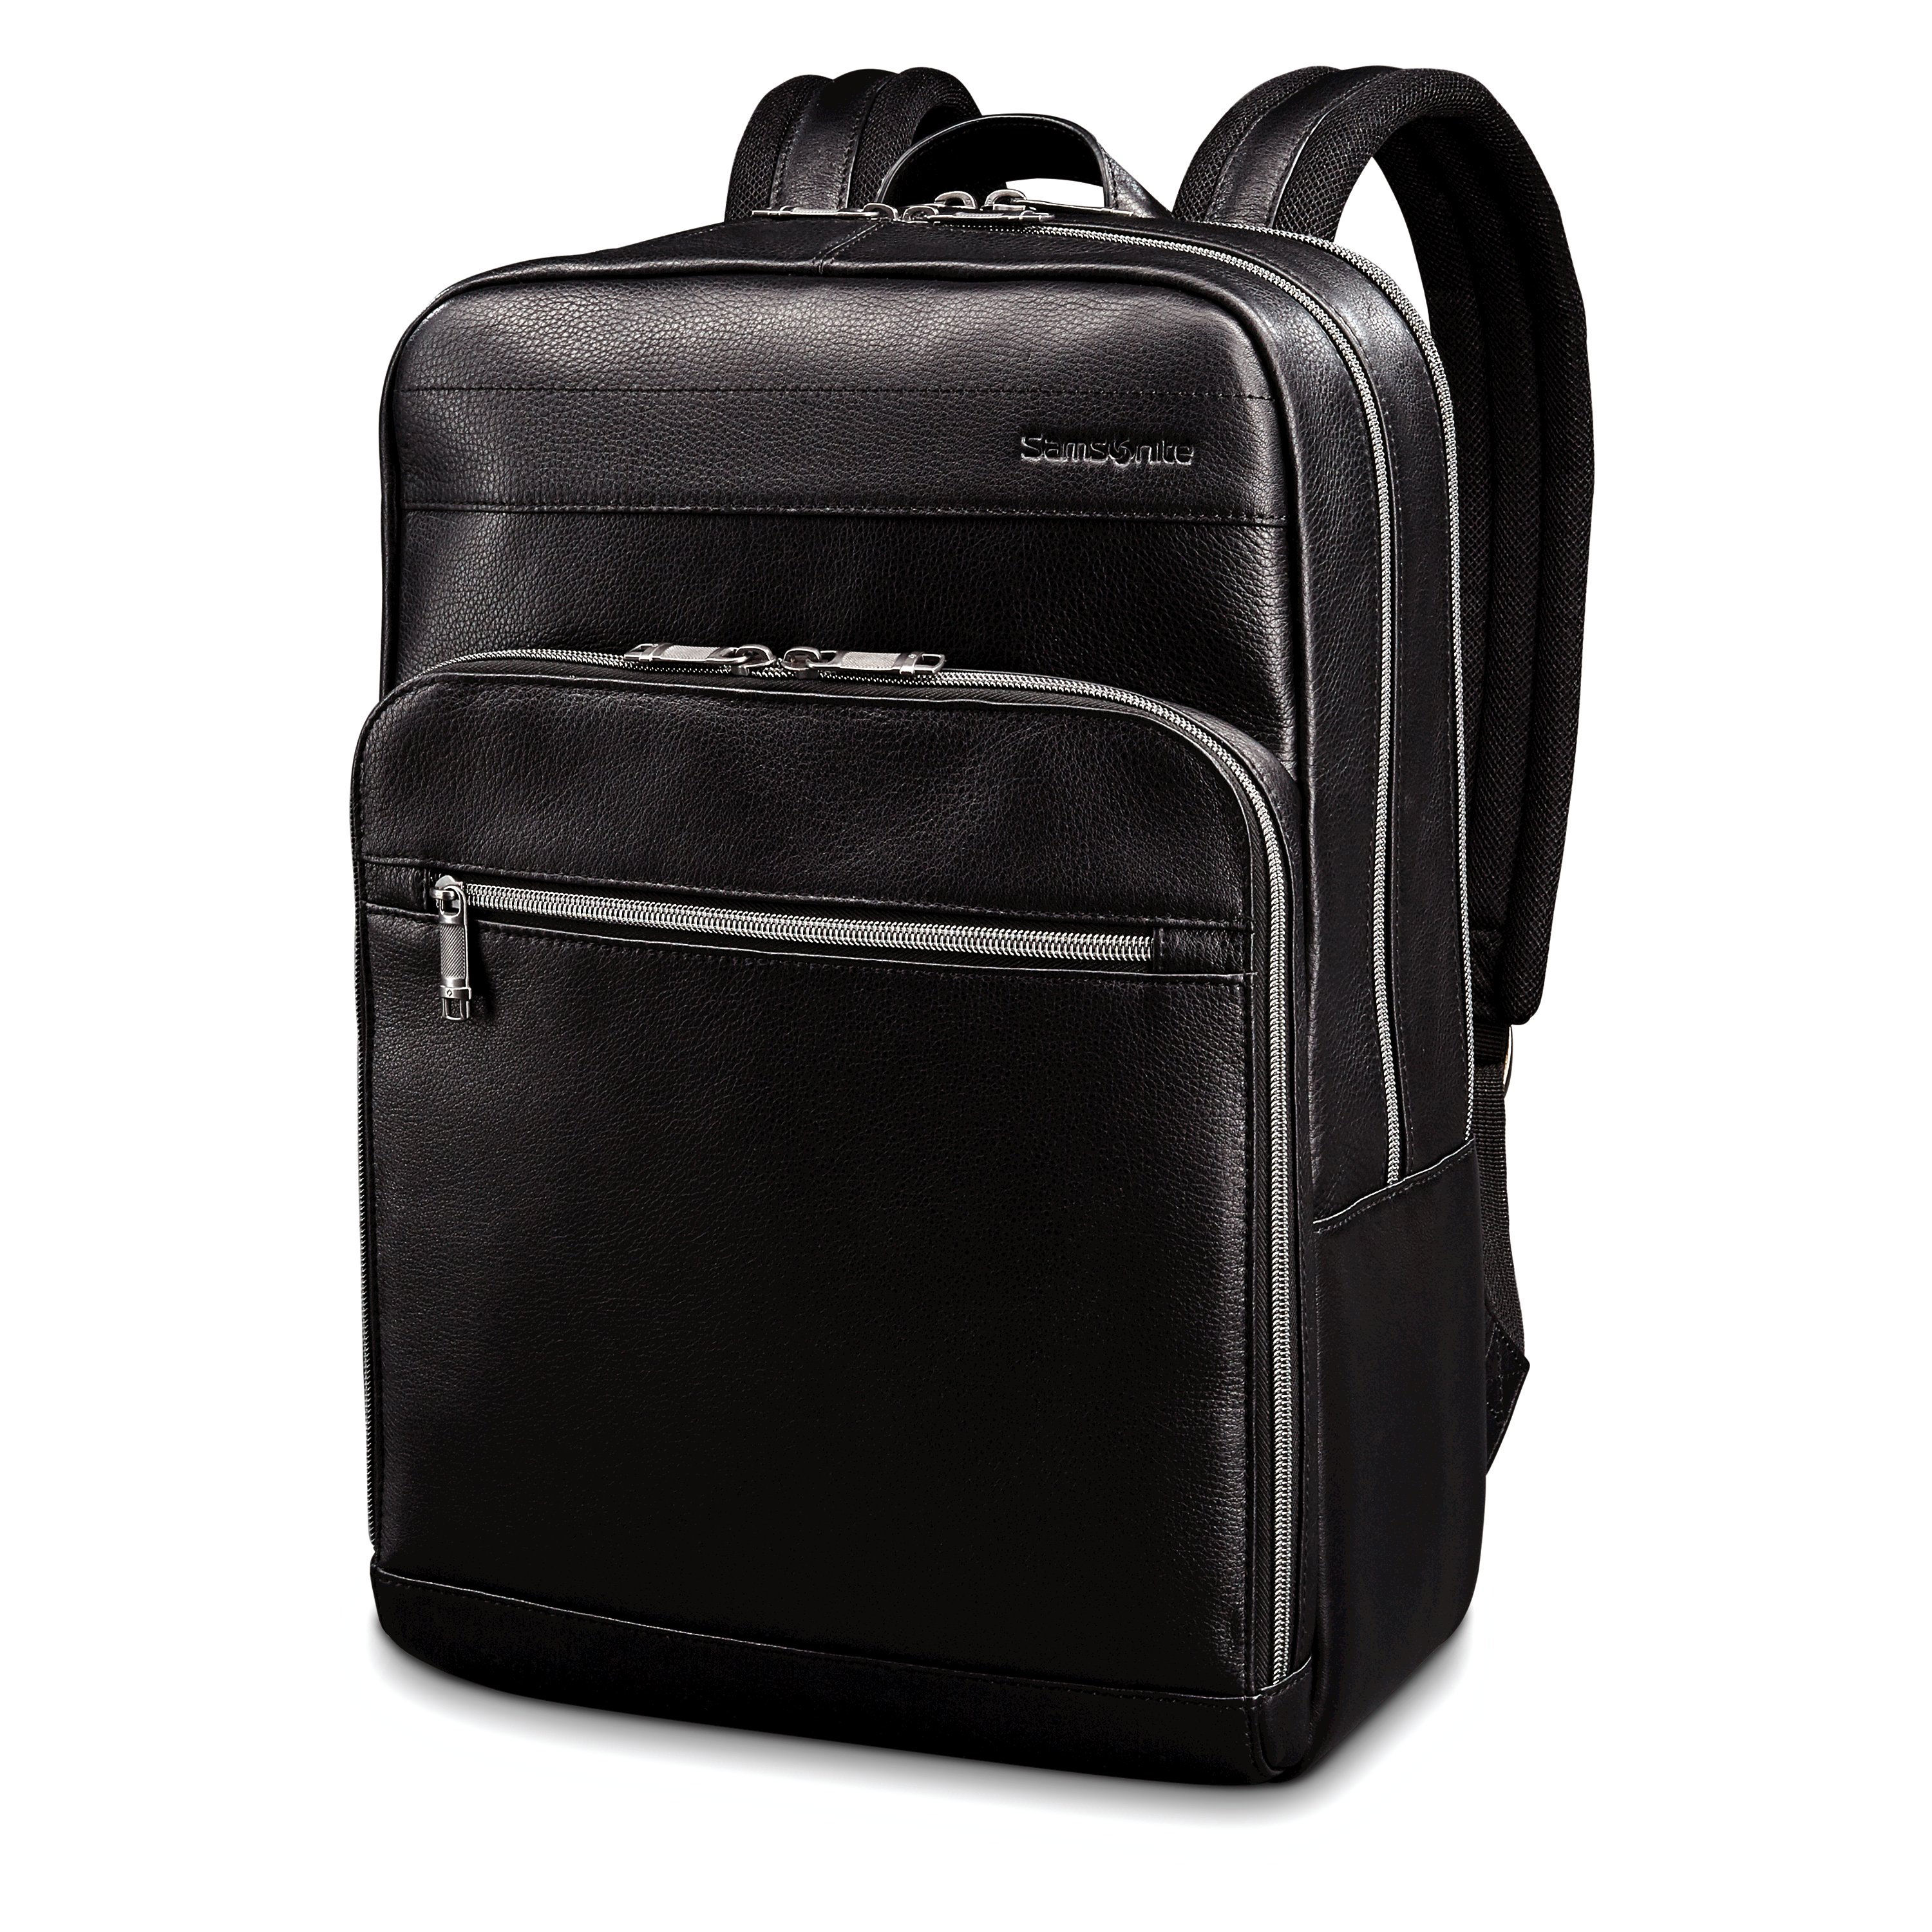 Samsonite Leather Laptop Bag | IQS Executive